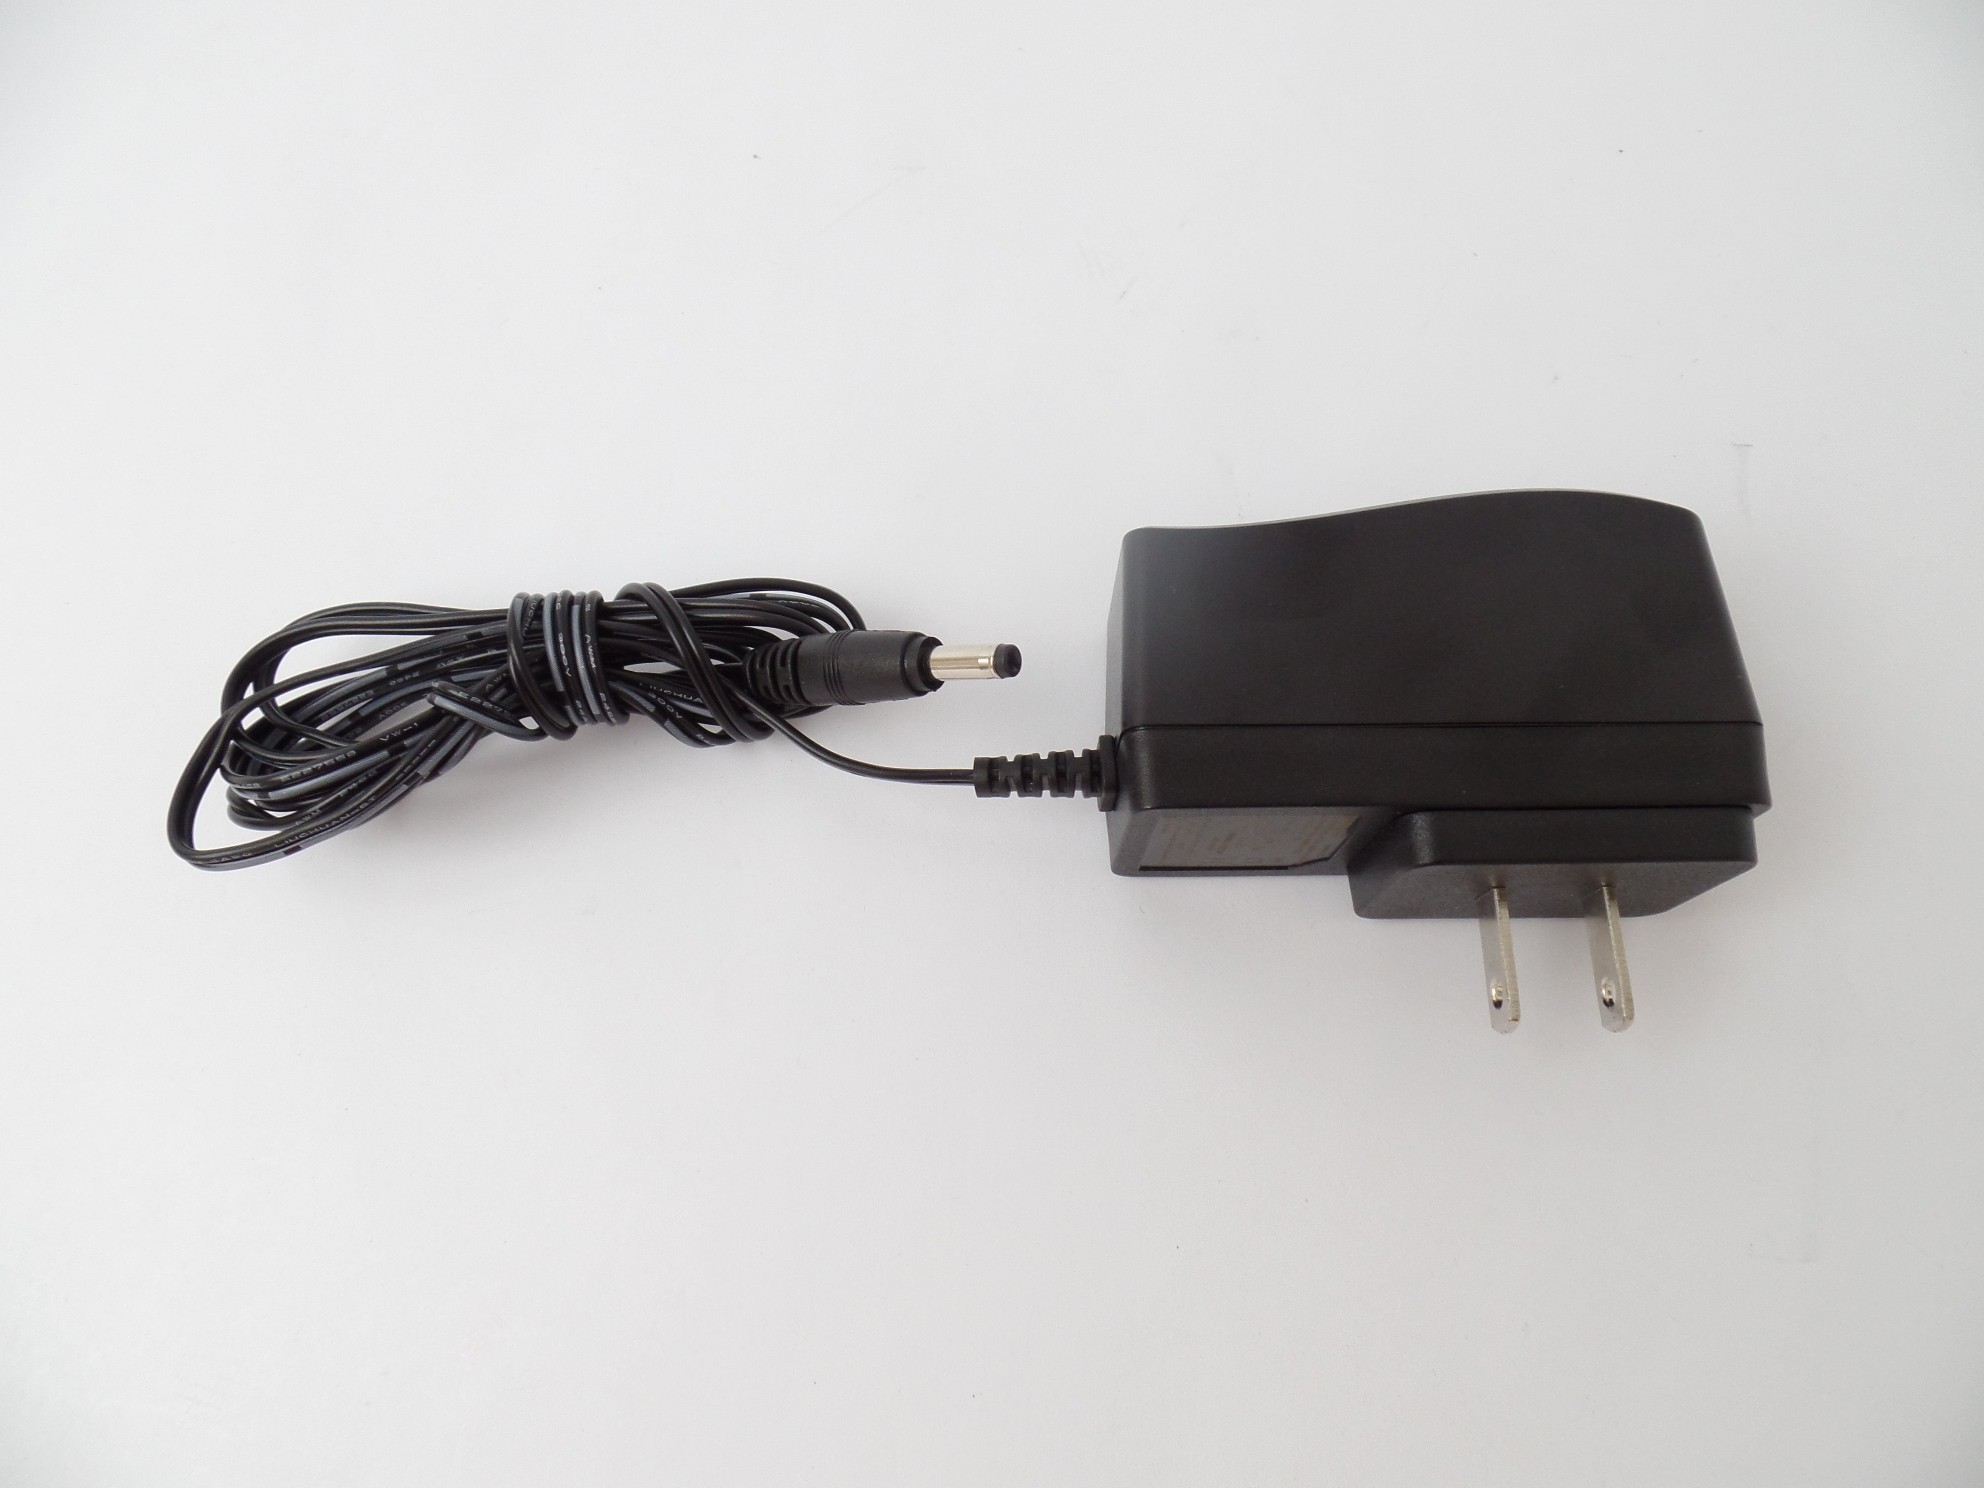 OEM Original Power Supply Adapter for Toshiba BDX5500 Streaming Media Player